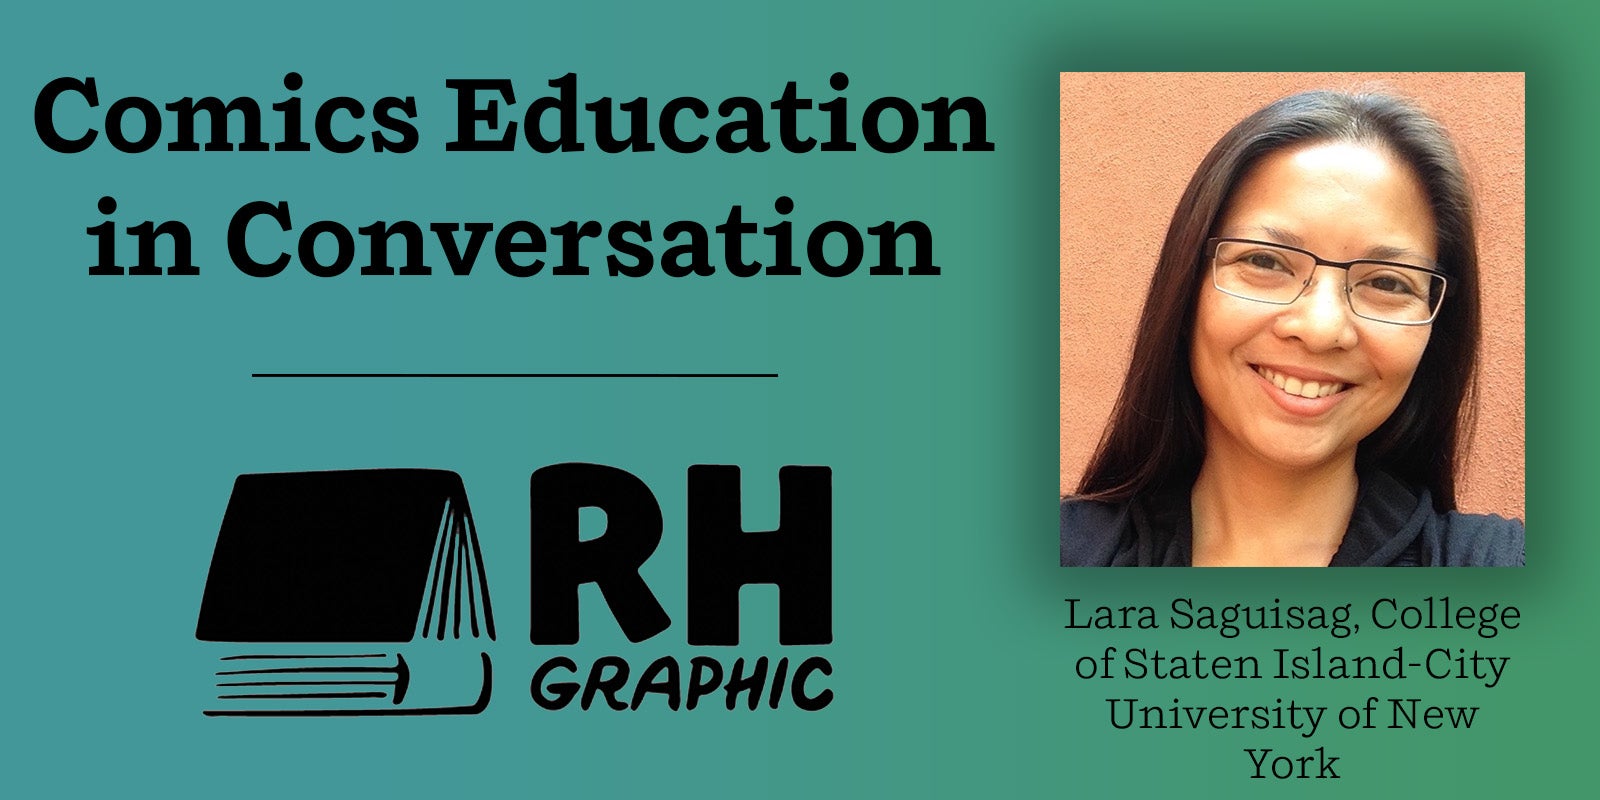 Comics Education in Conversation: Lara Saguisag